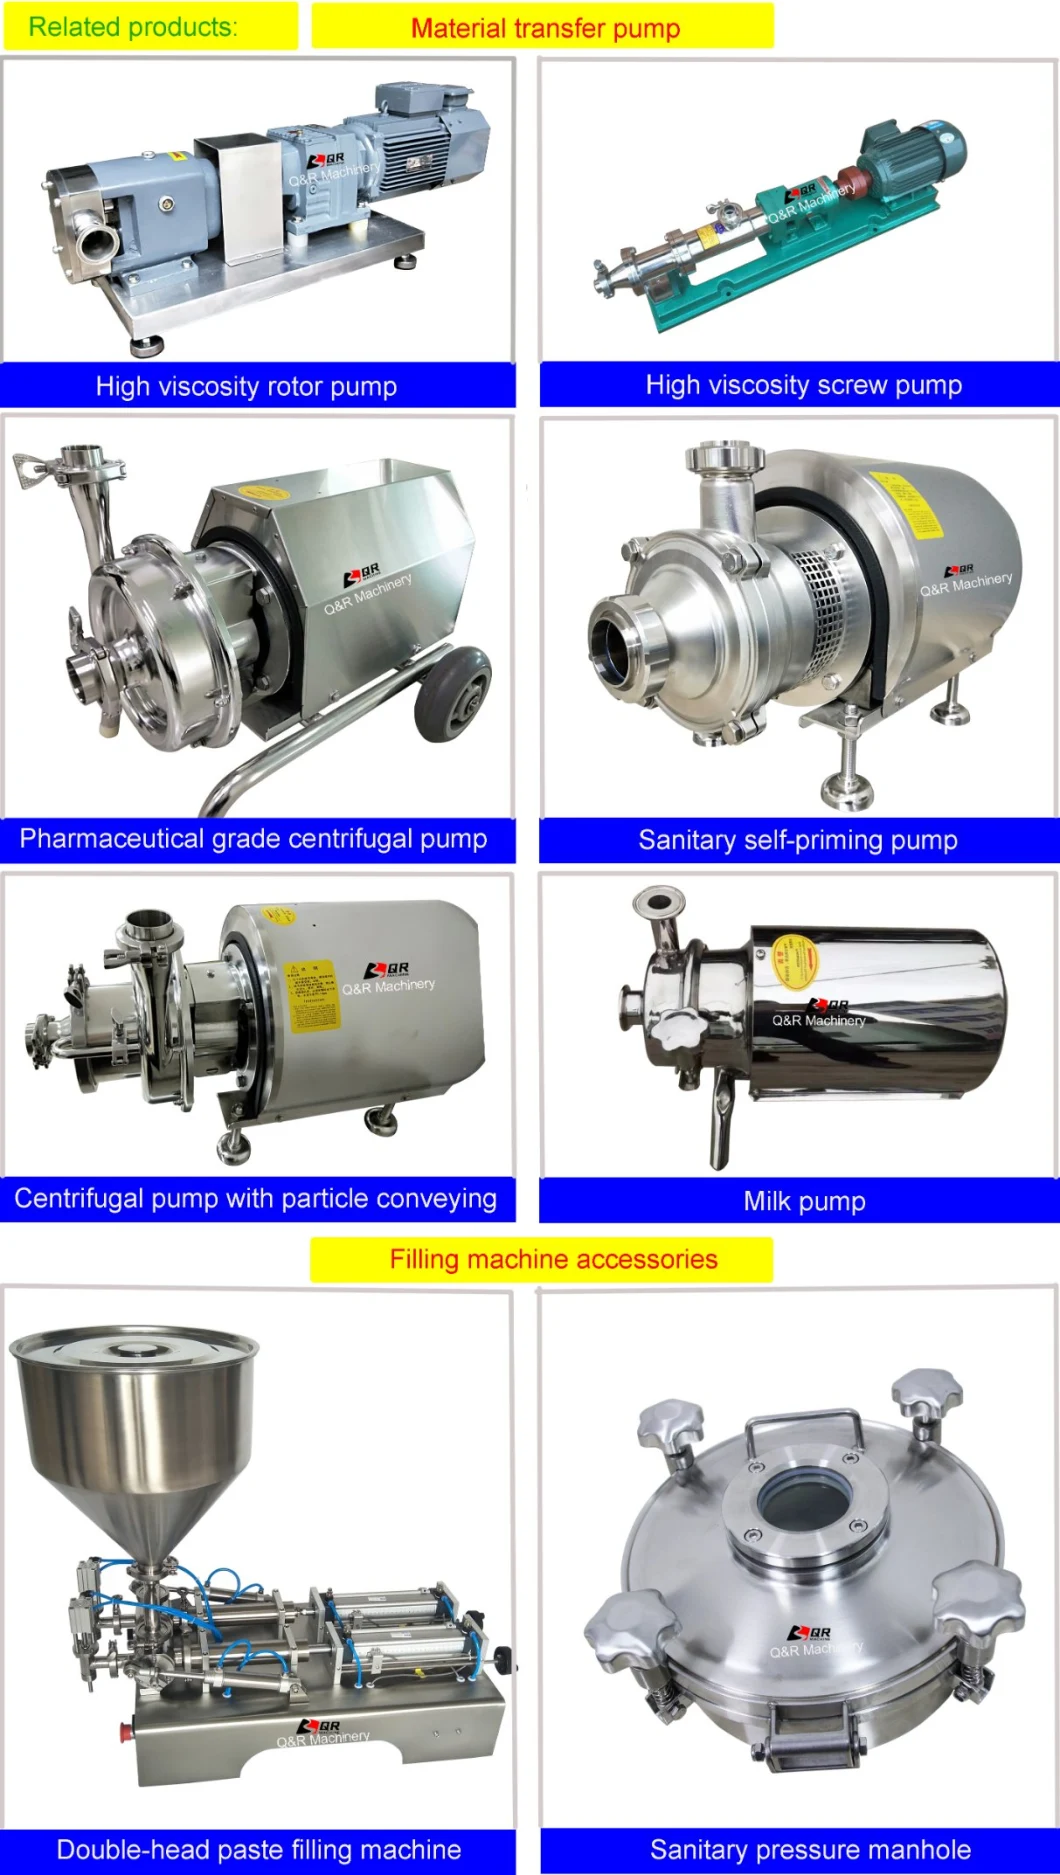 CE Certification Industrial Electric Heating Liquid Detergent Shampoo Homogenizer Agitator Tank